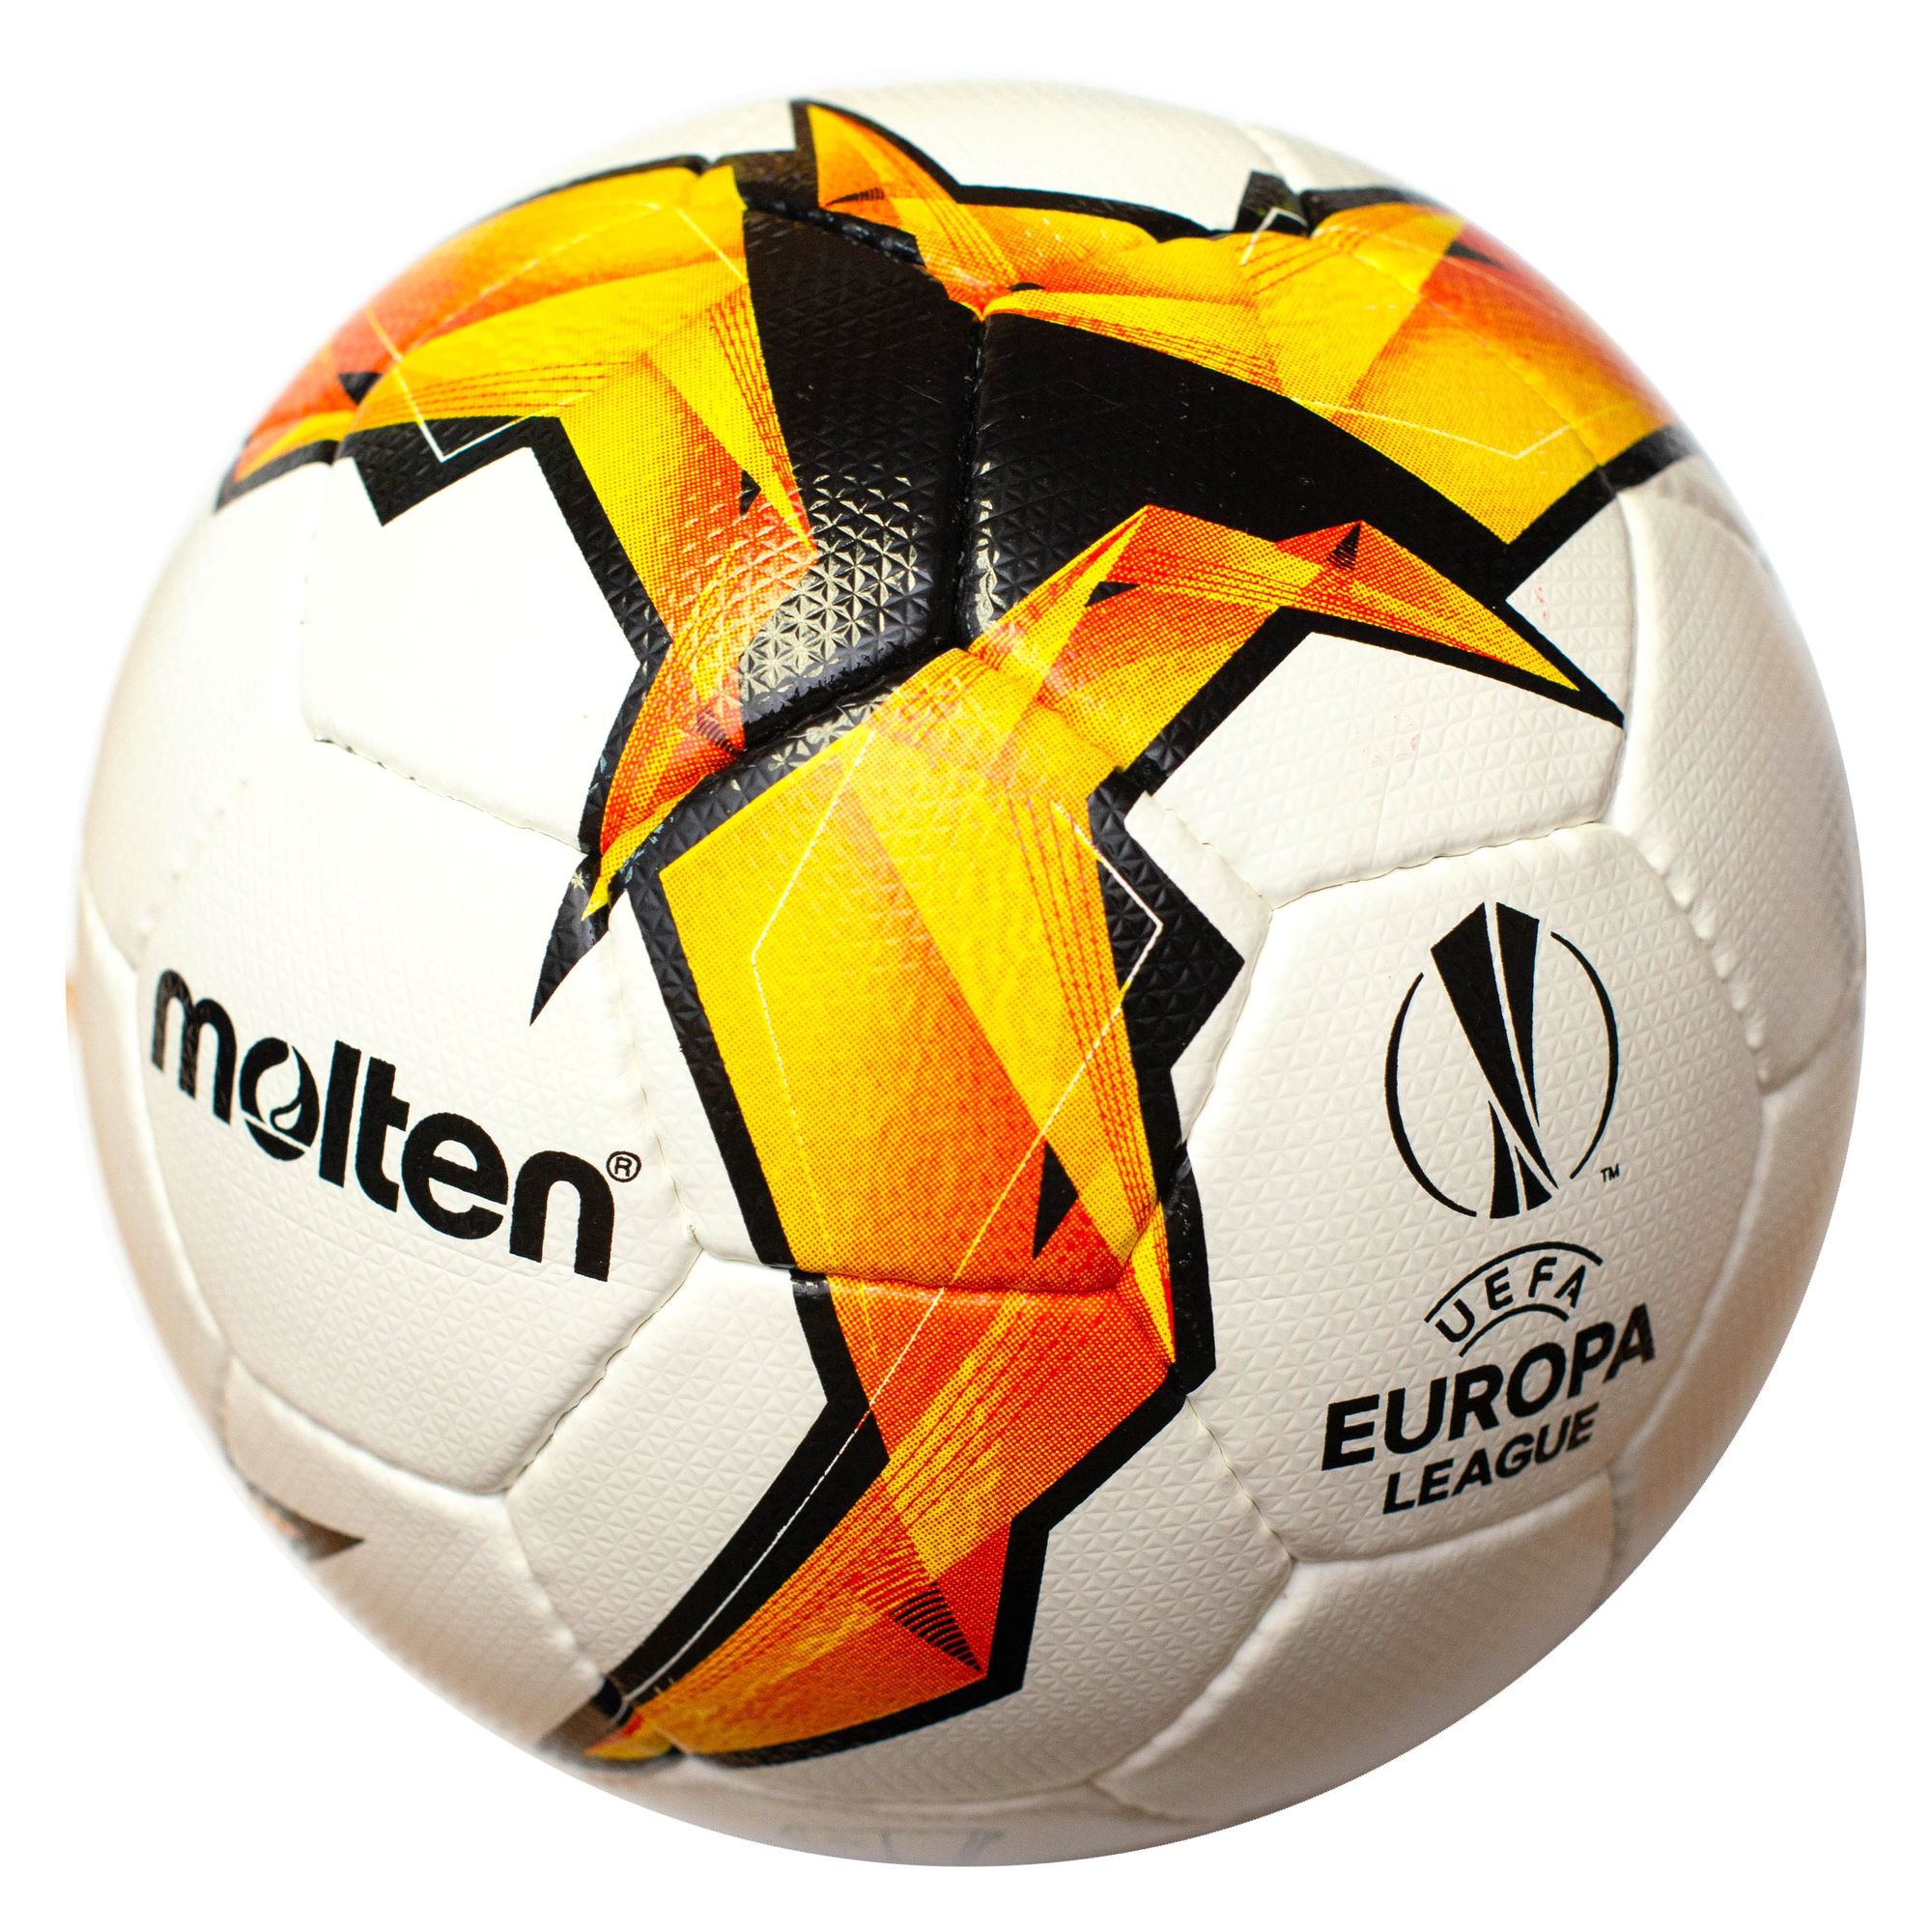 Official Molten Match ball Replica of the UEFA Europa League 2810 Yellow/Blue 